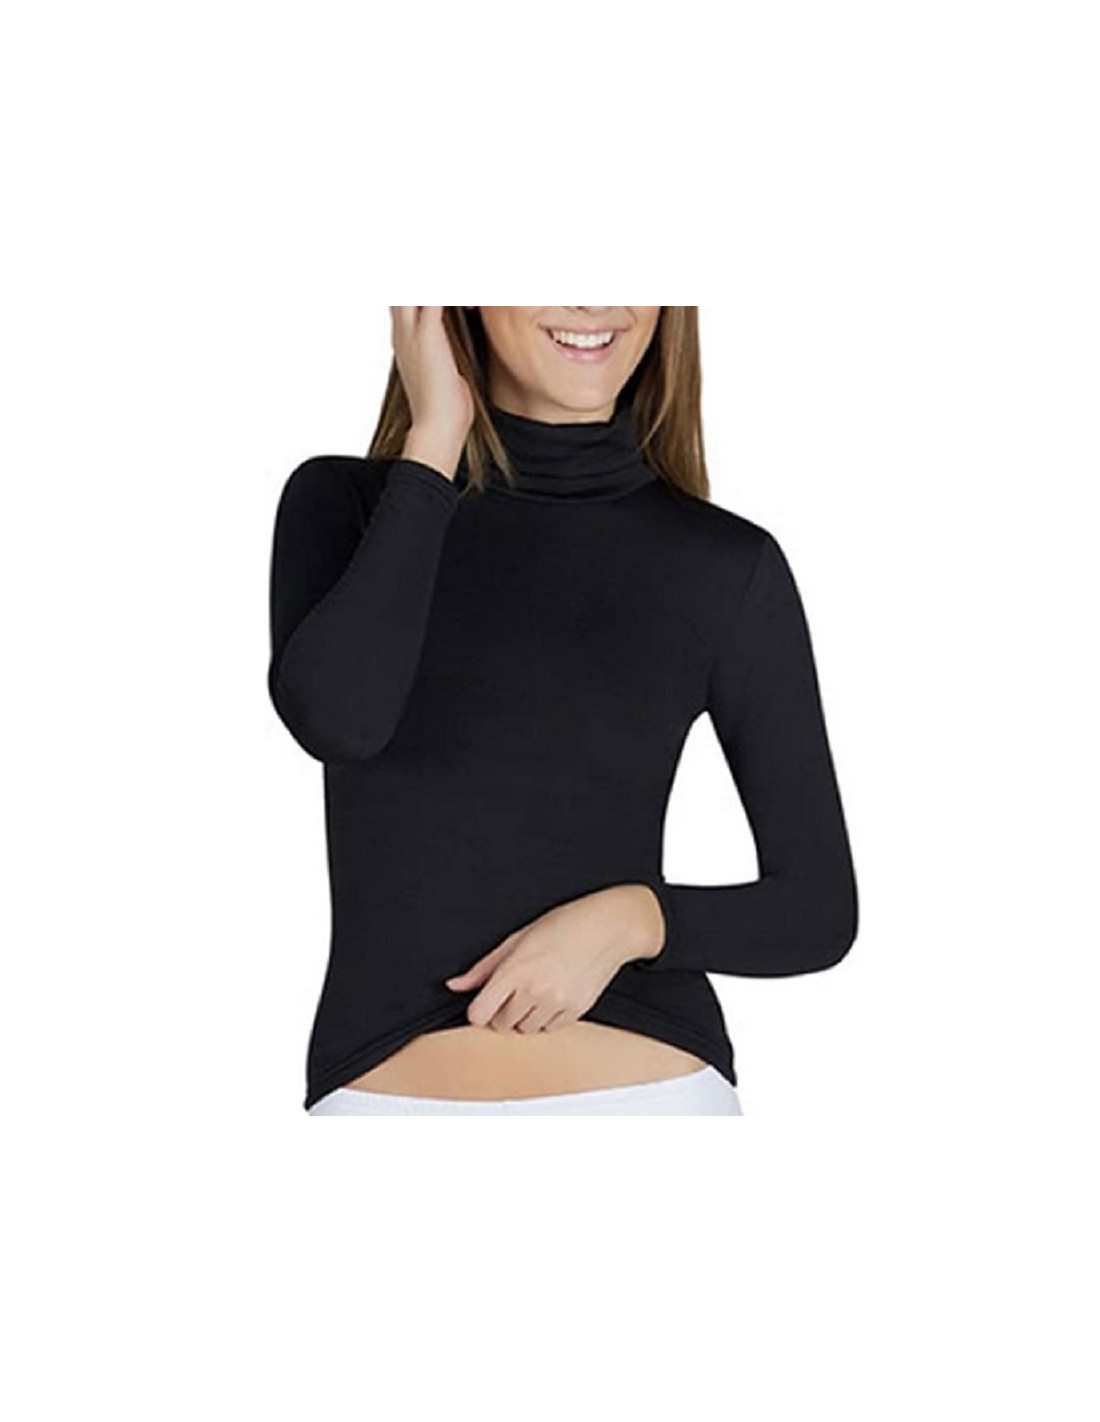 Ysabel Mora Camiseta térmica para mujer de manga larga y cuello cisne